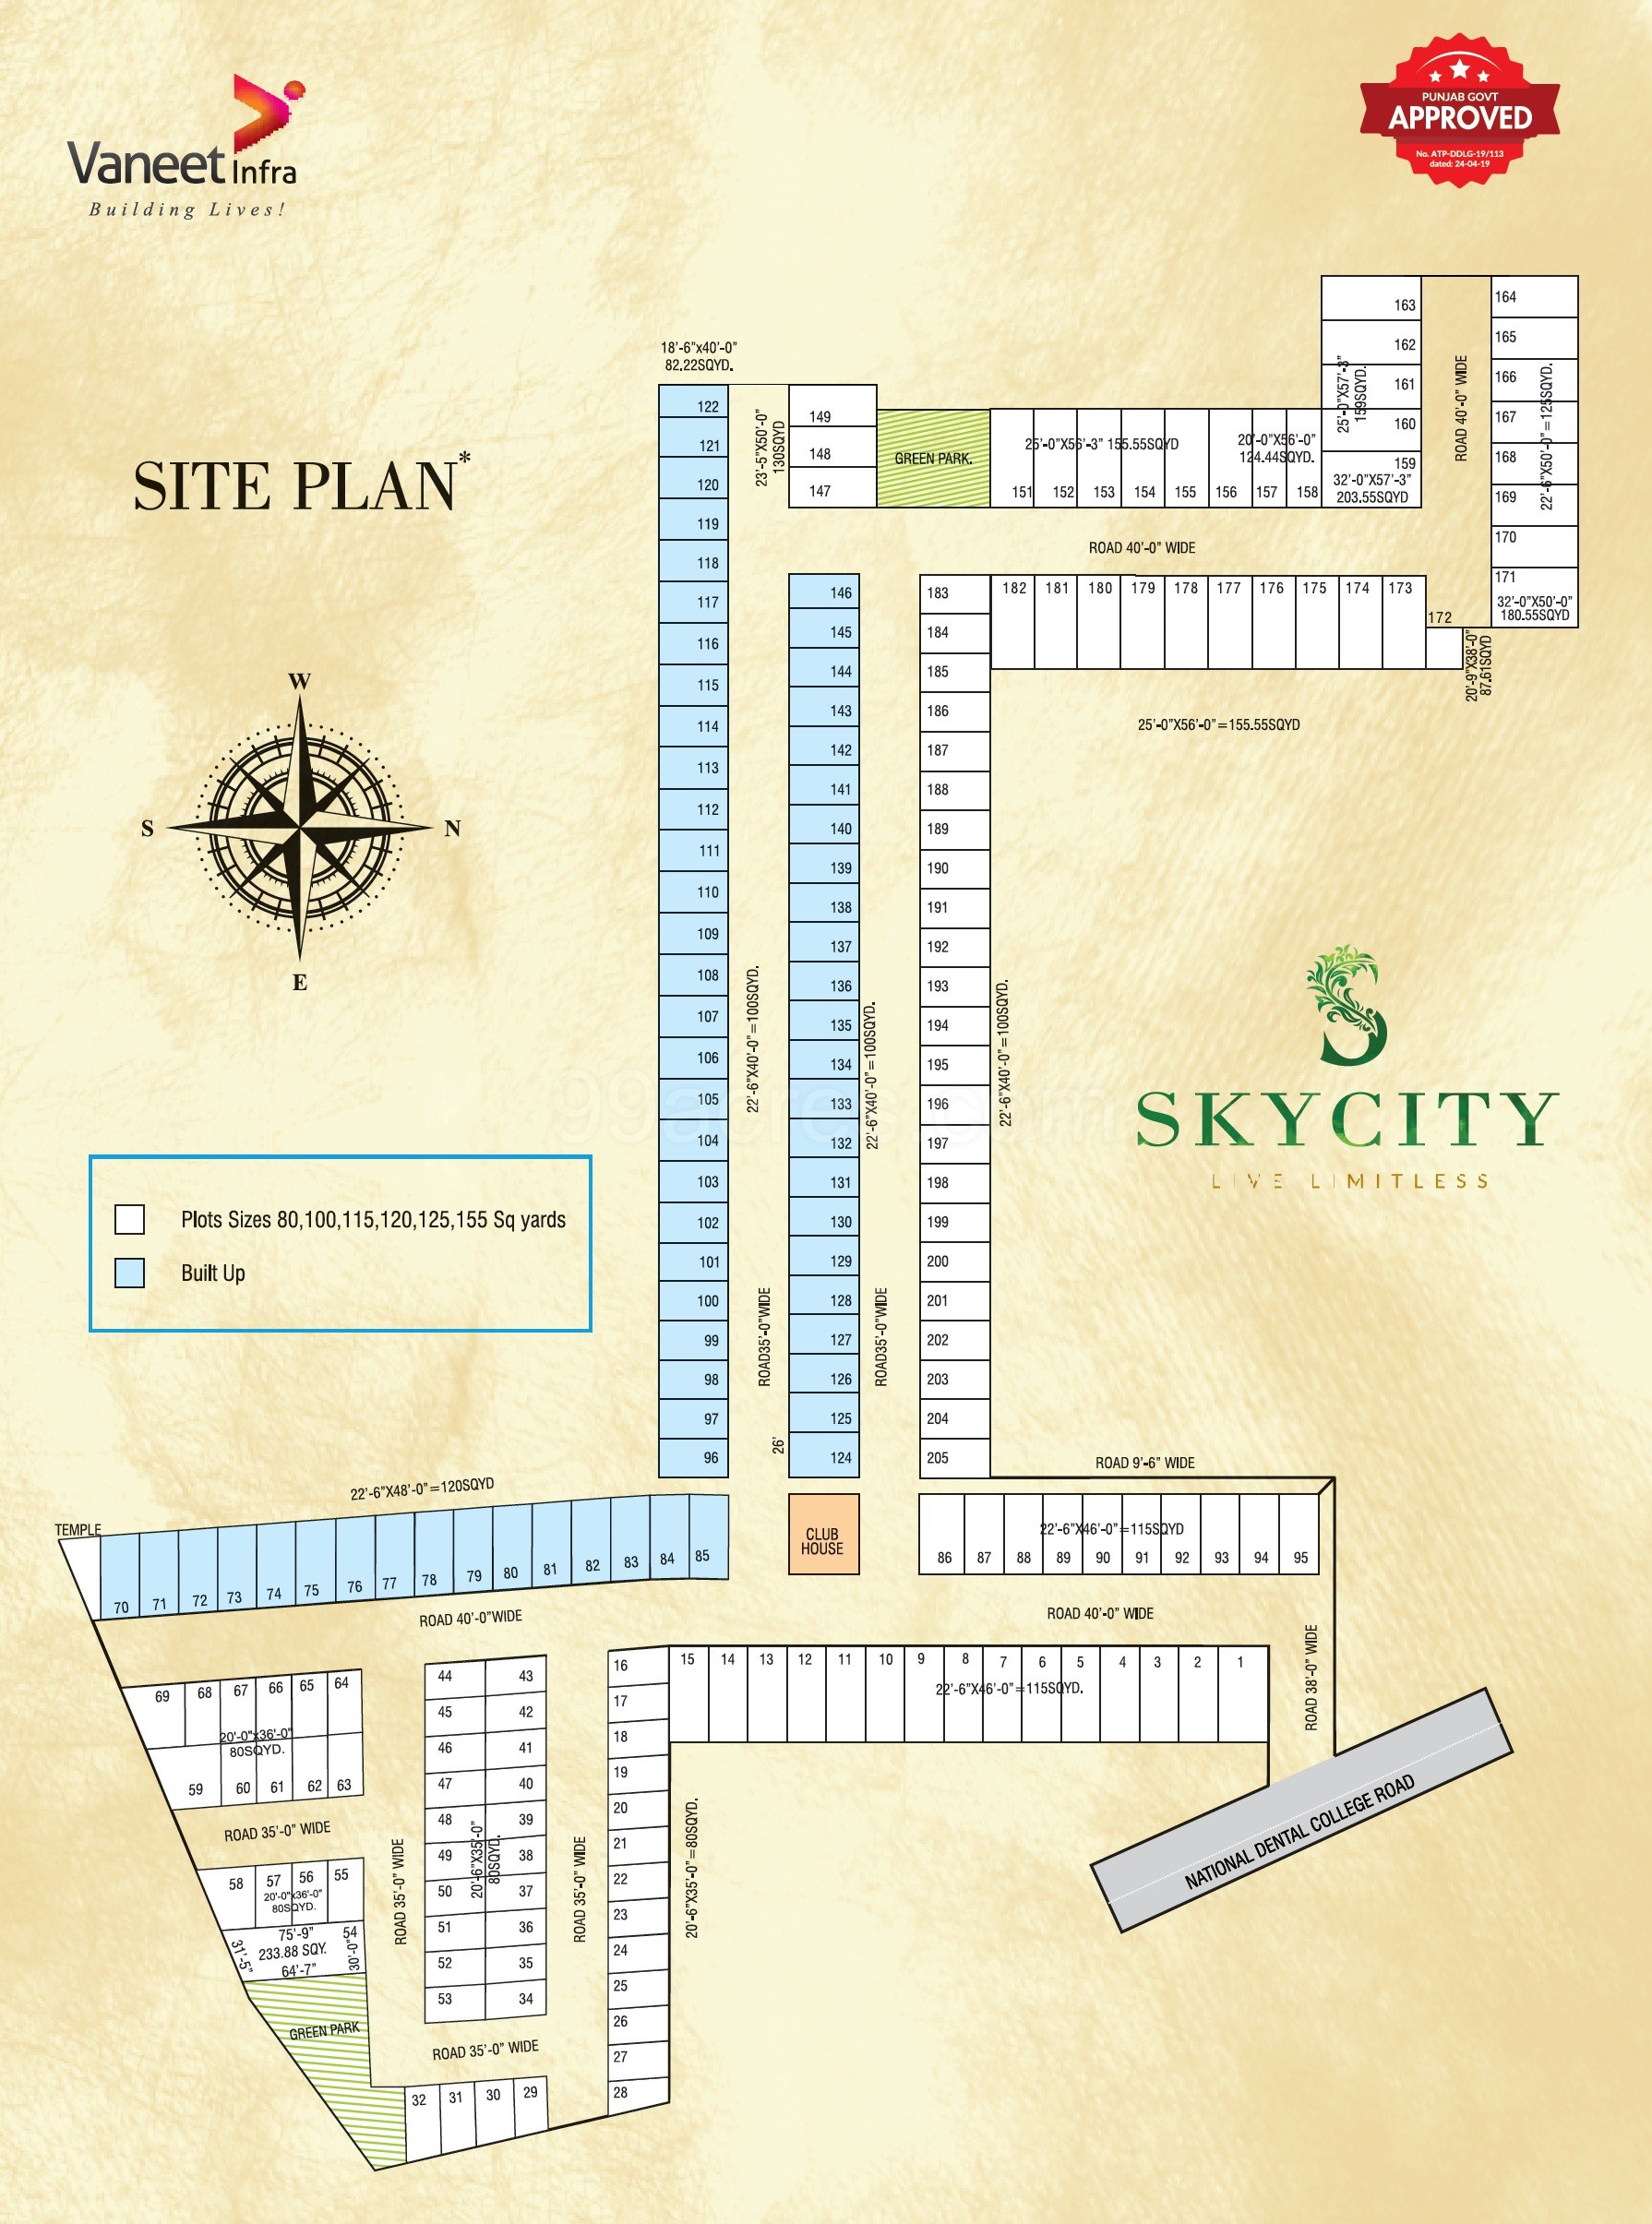 Vaneet Sky City Master Plan